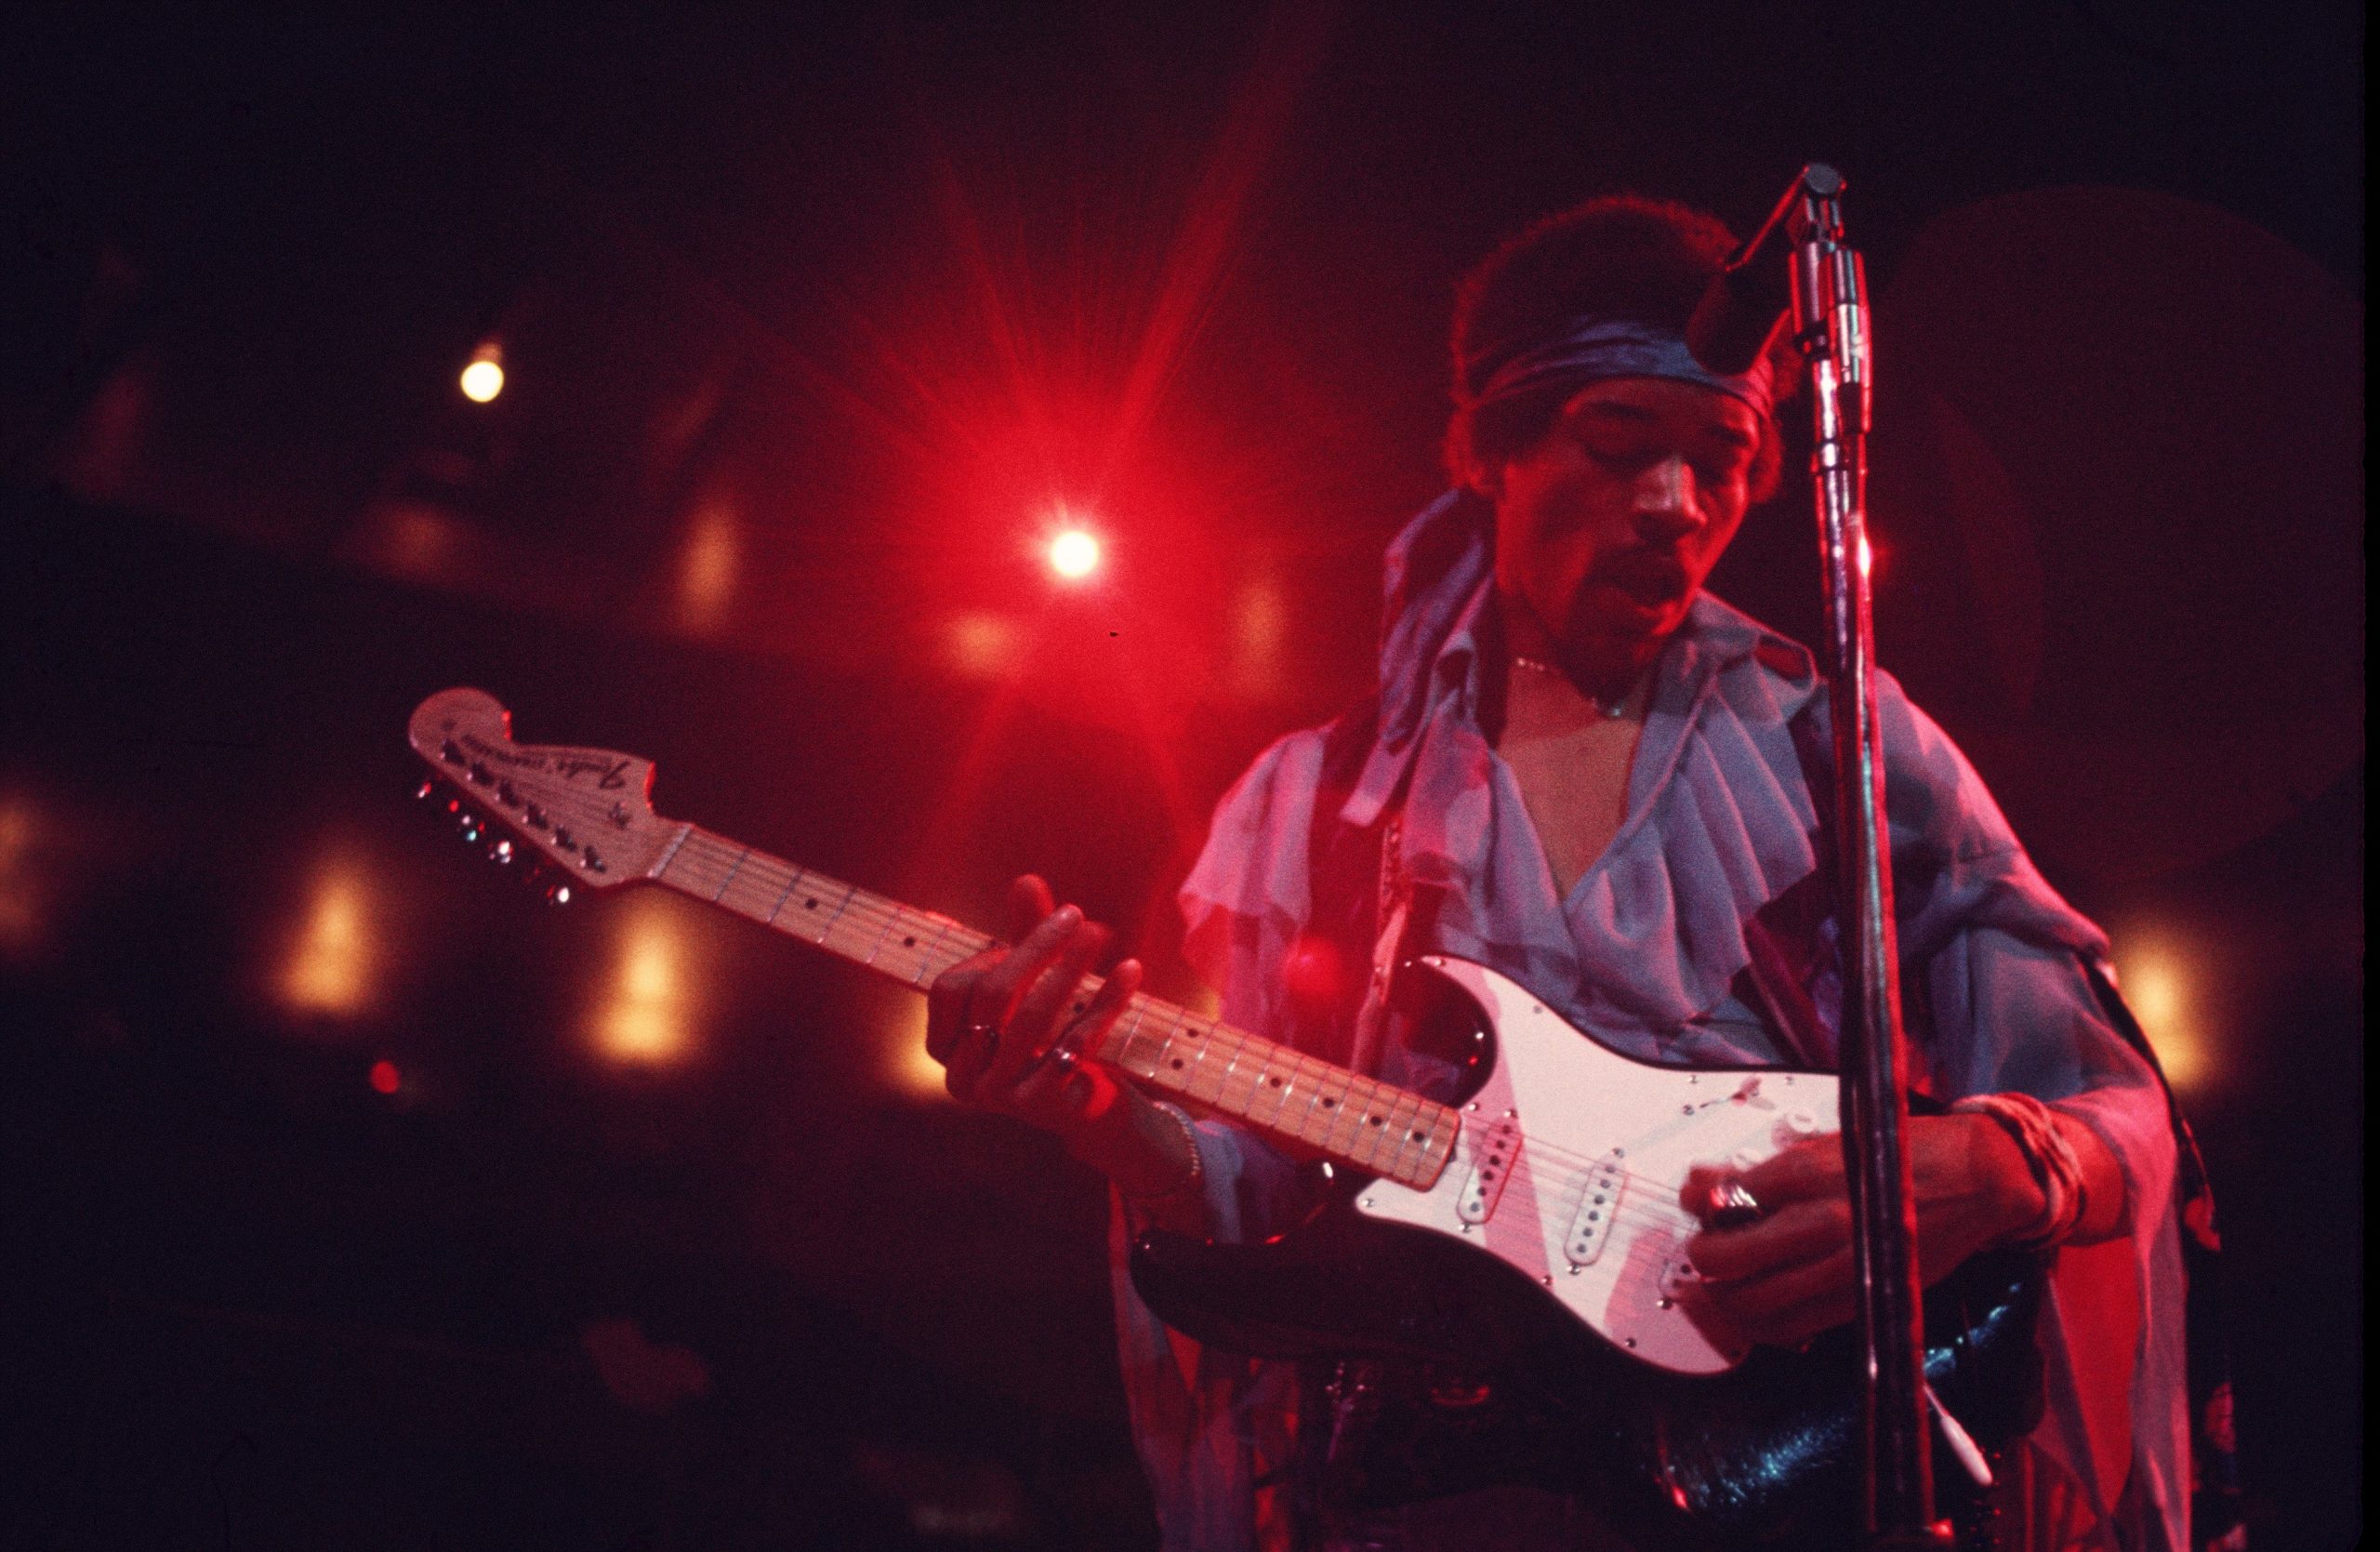 Jimi Hendrix plays guitar on stage.